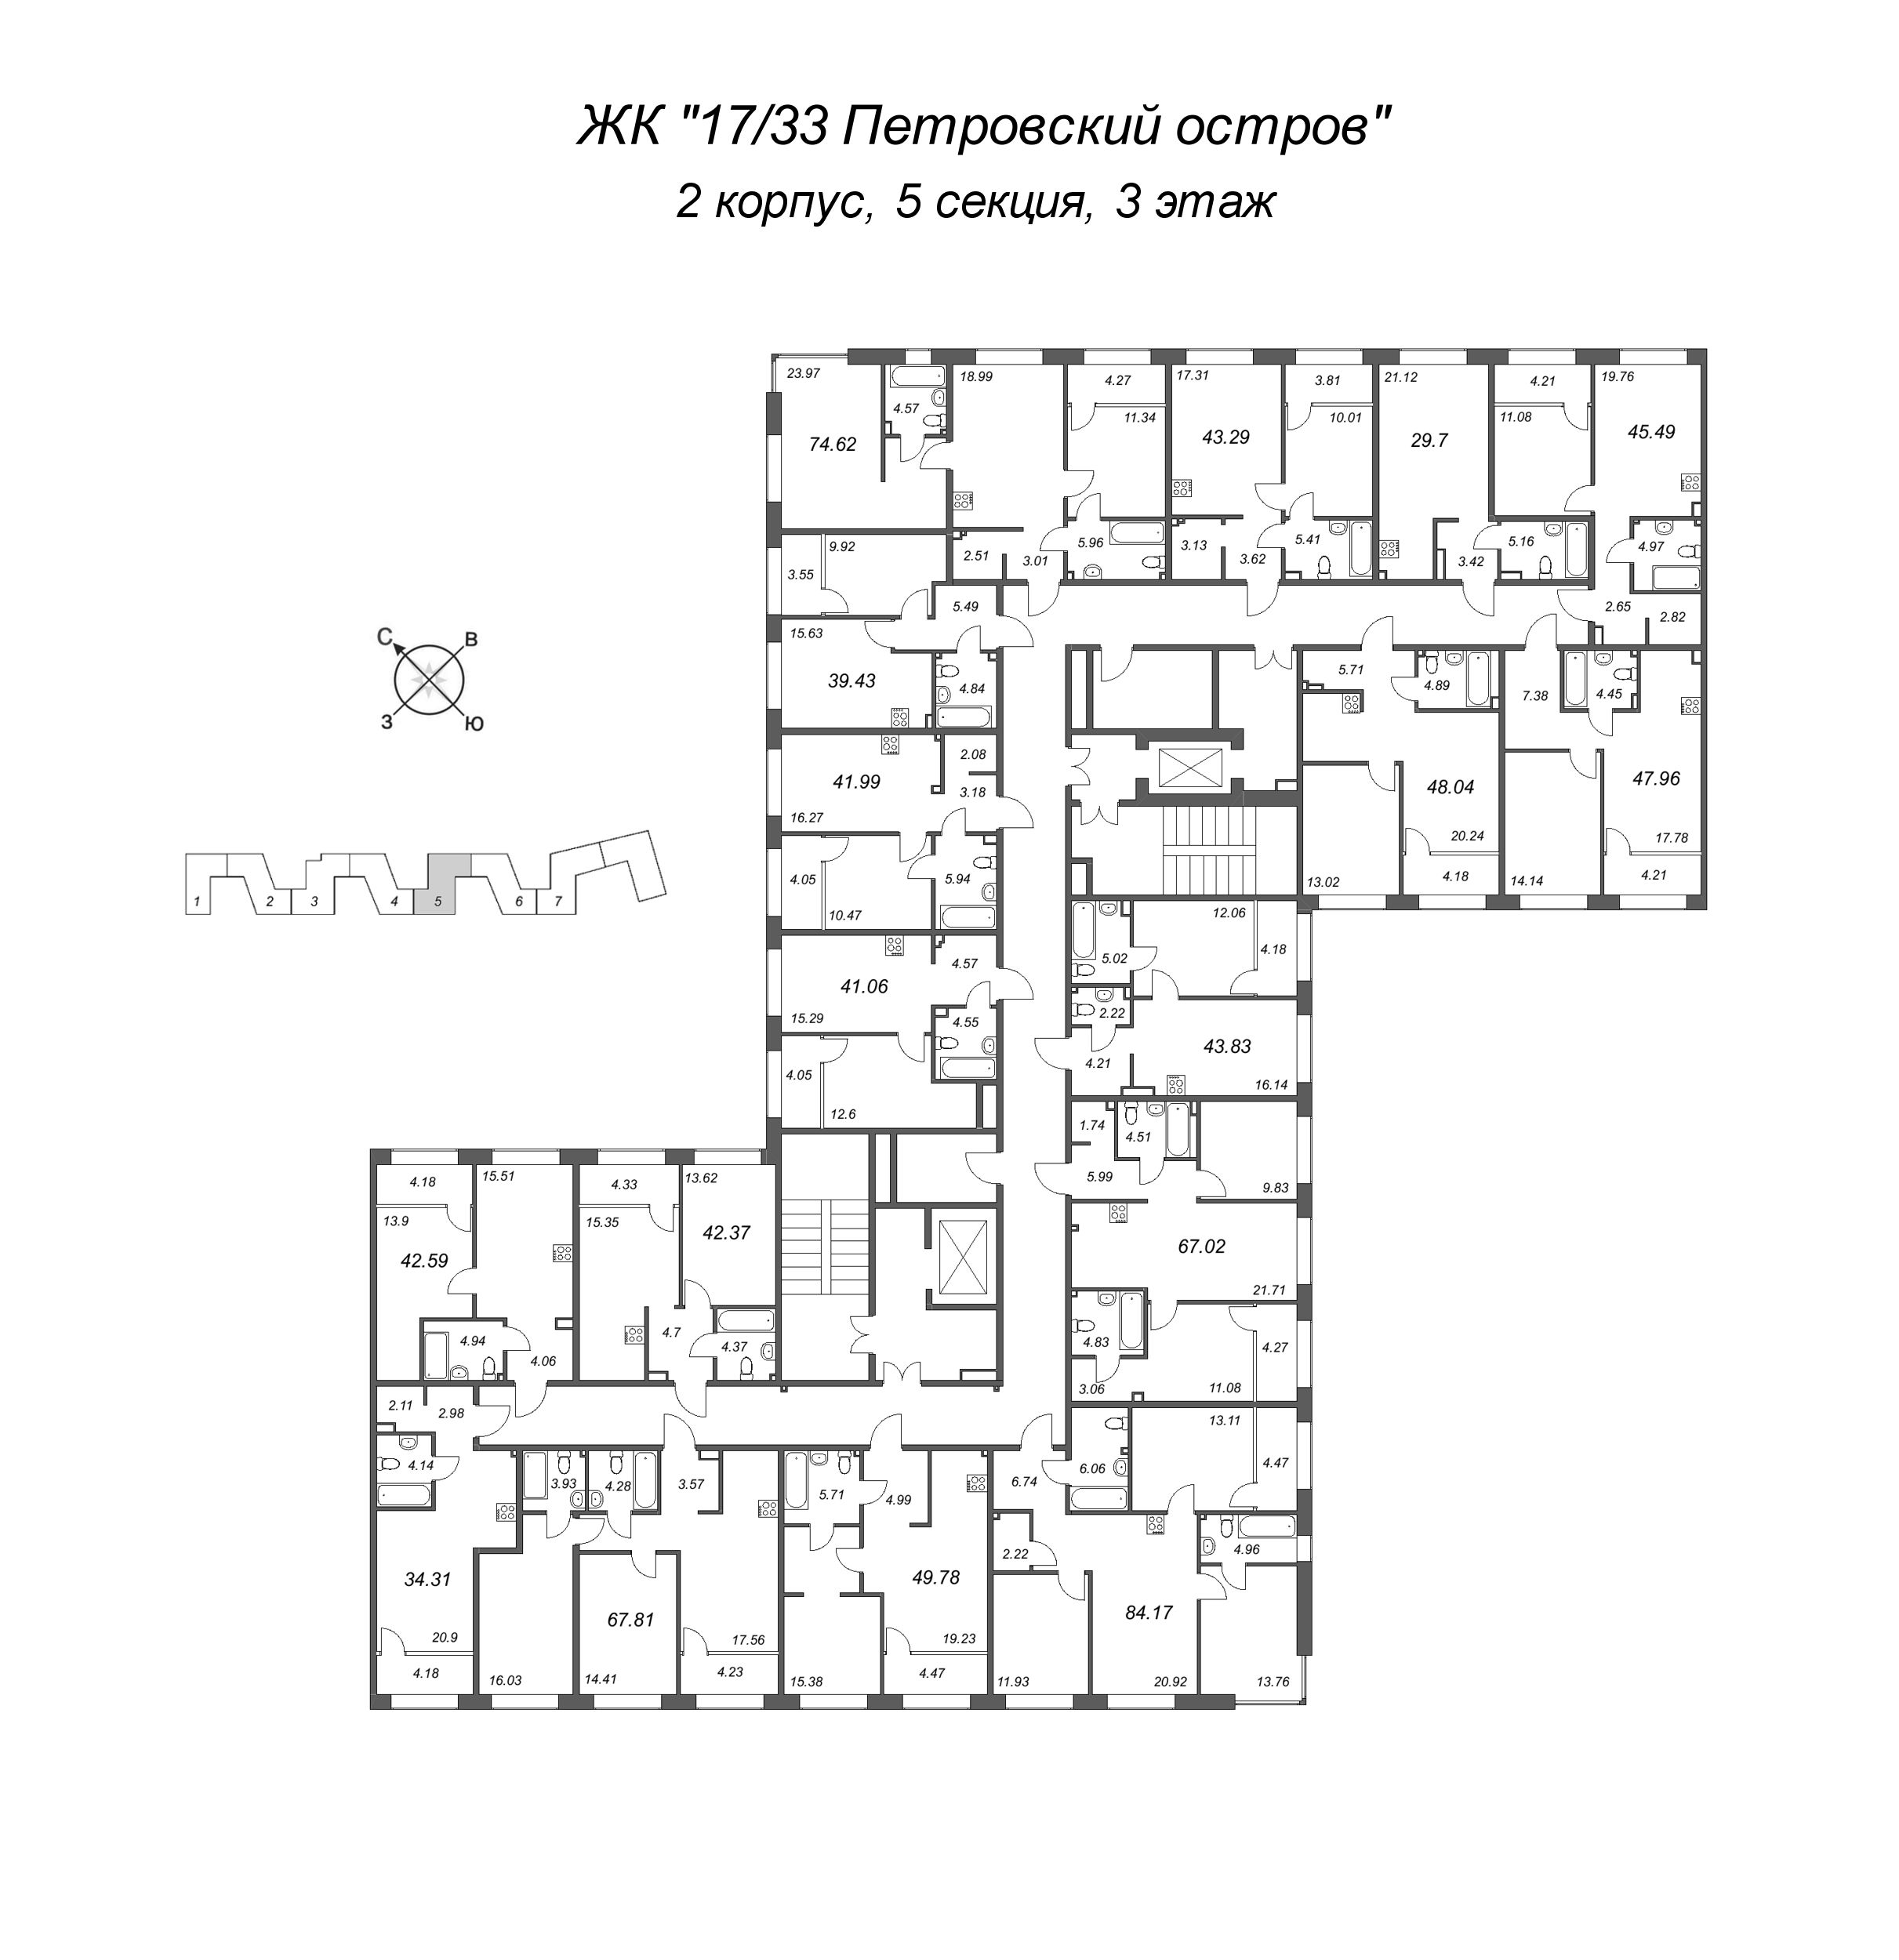 2-комнатная (Евро) квартира, 39.43 м² - планировка этажа